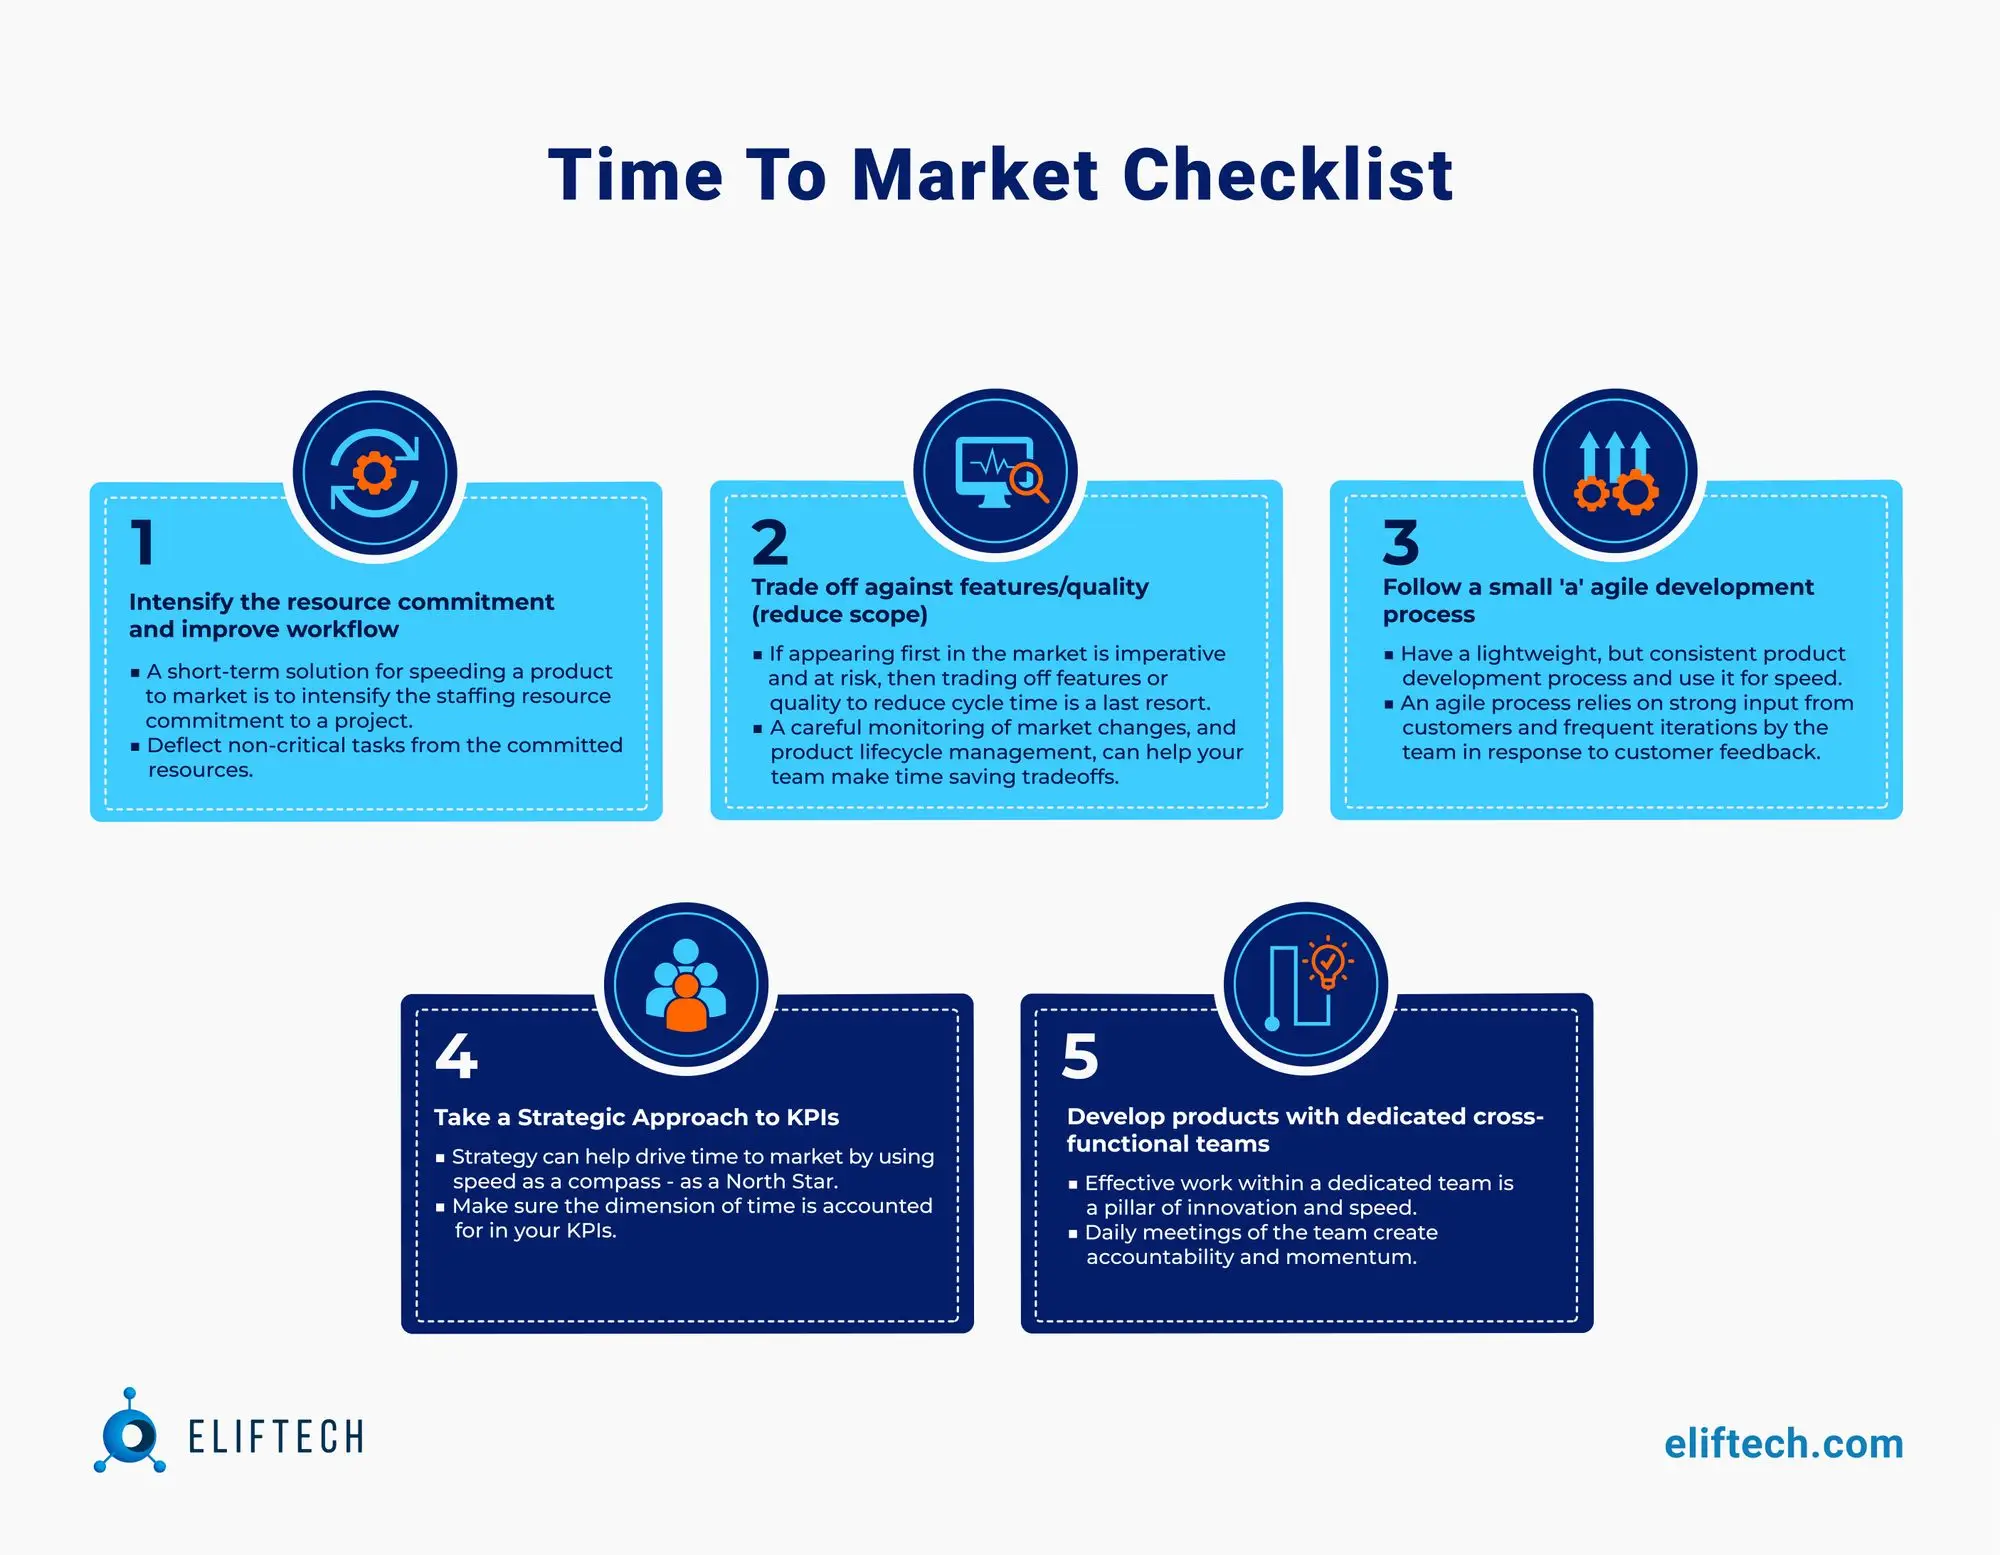 Time to Market checklist